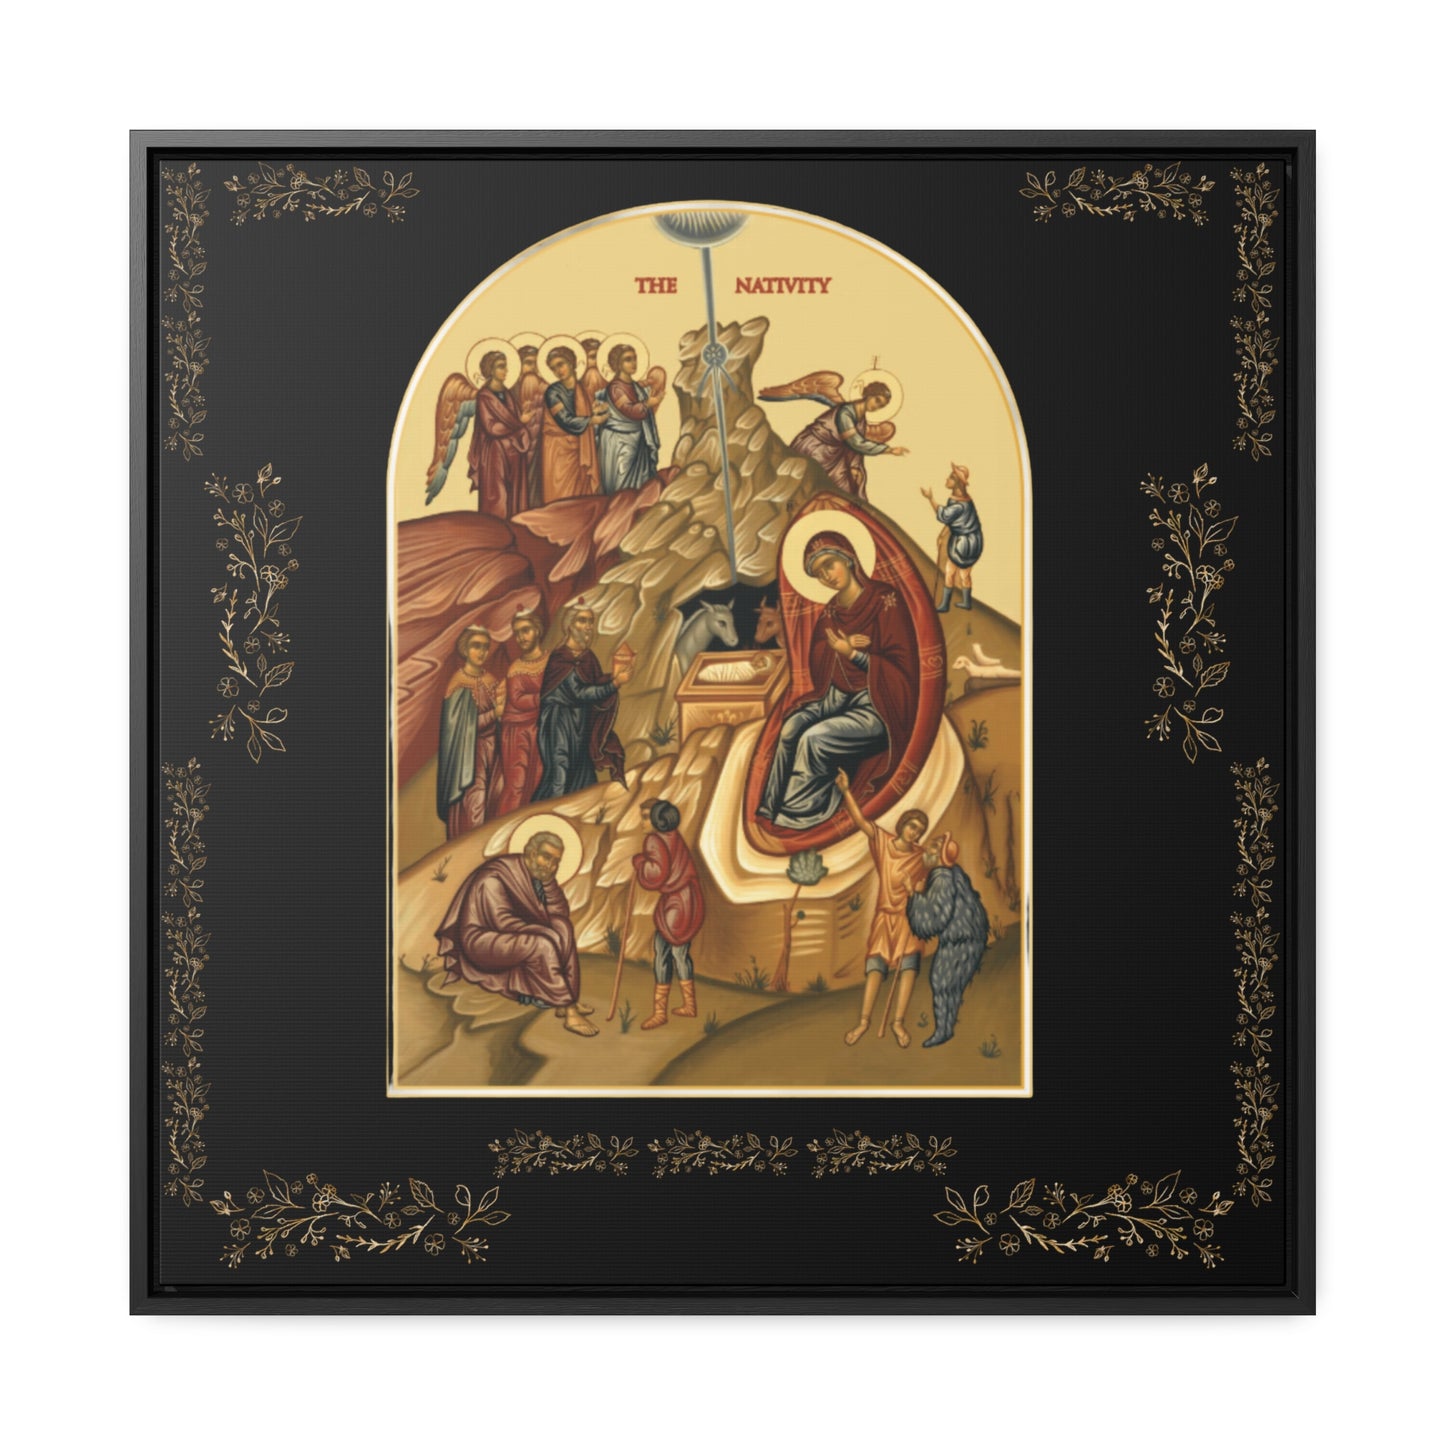 The Nativity-The Catholic Church Of The Syriac Chaldean Tradition